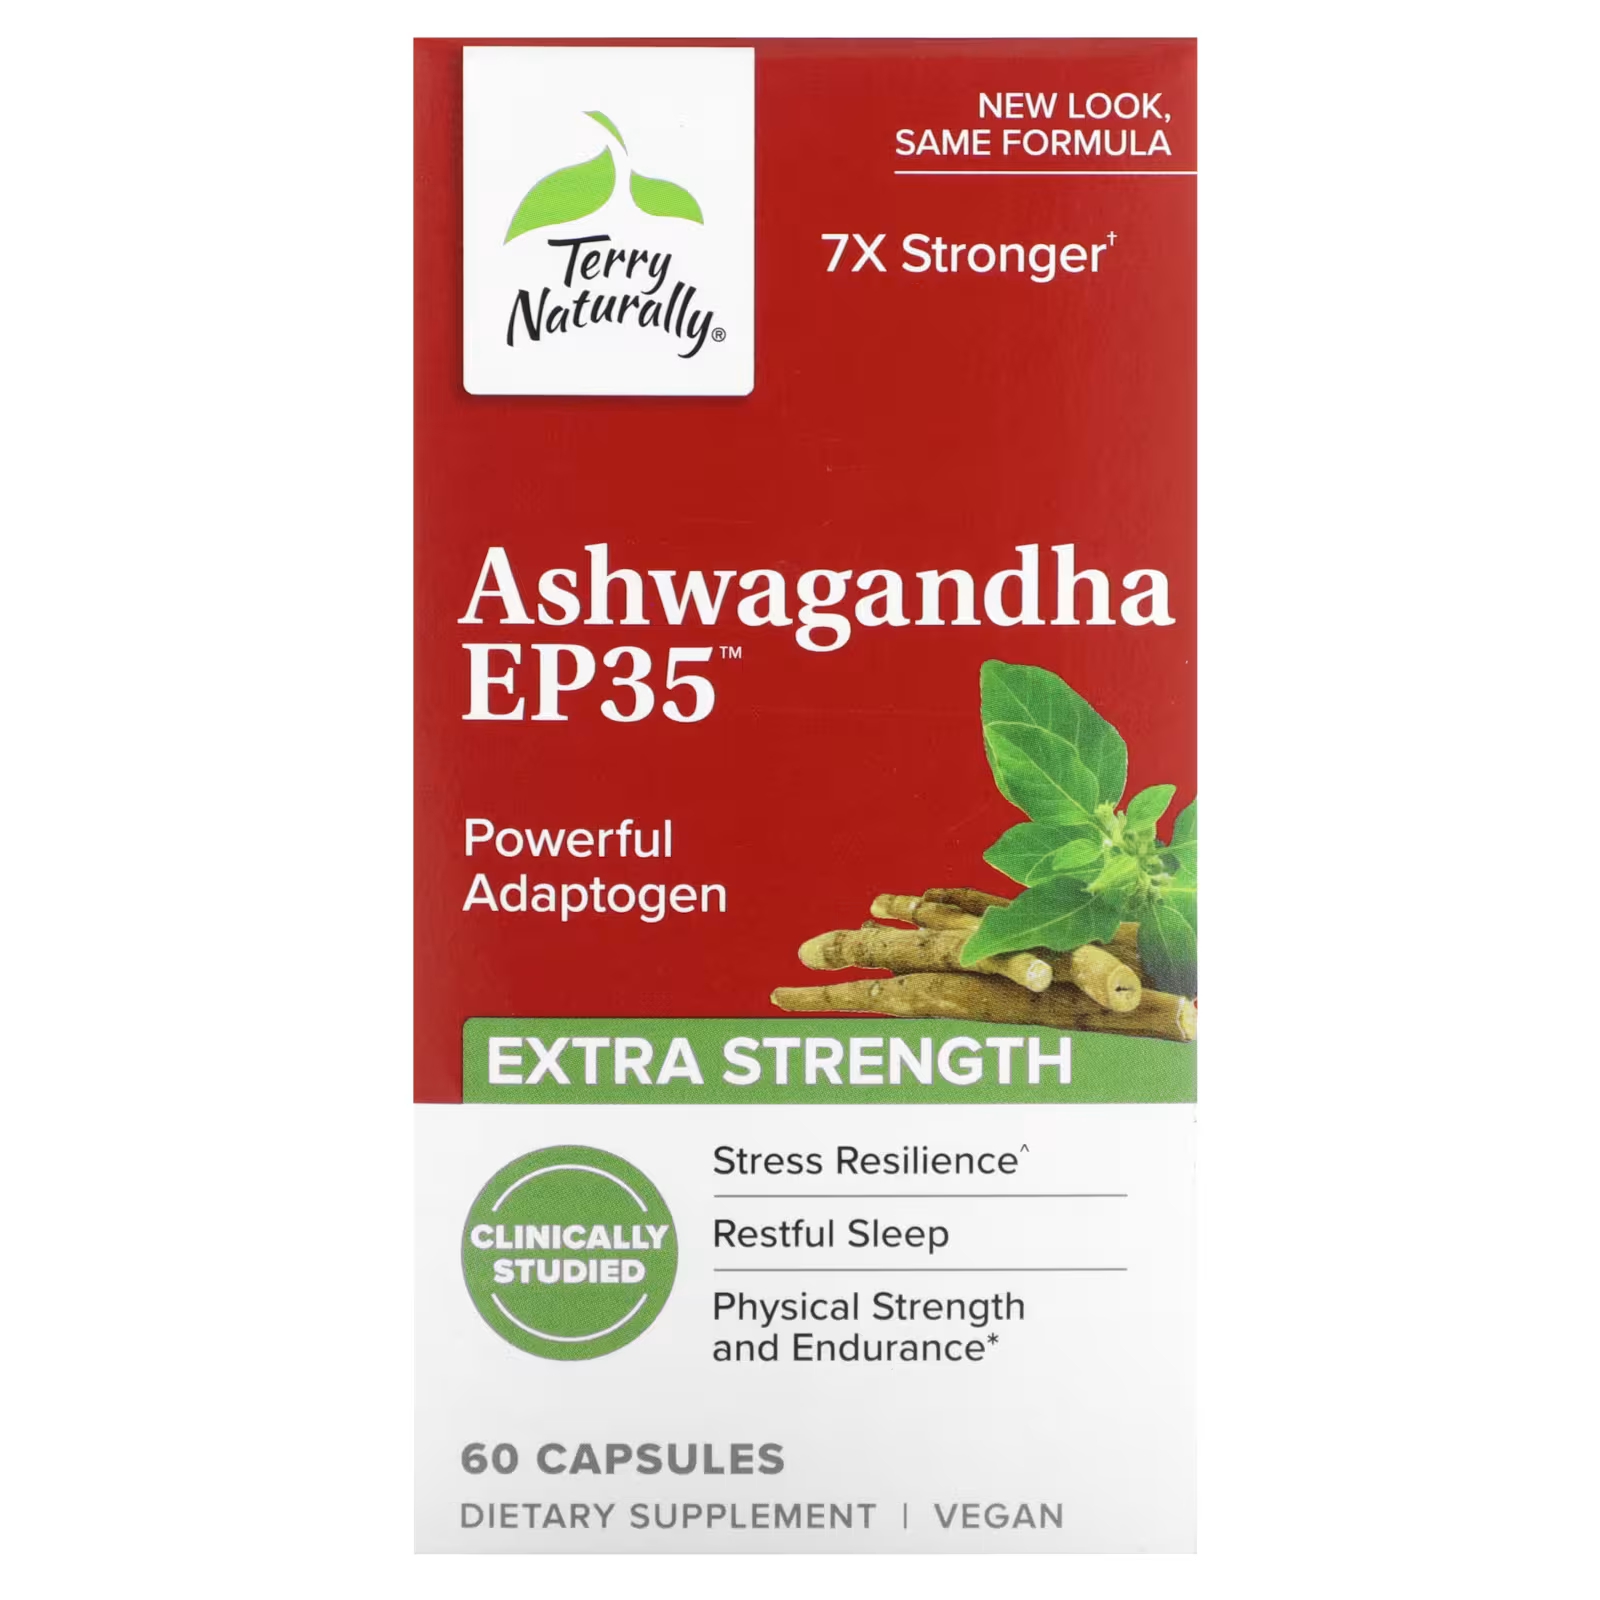 Пищевая добавка Terry Naturally Ashwagandha EP35 Extra Strength, 60 капсул пищевая добавка irwin naturals ashwagandha extra strength 60 мягких капсул с жидкостью